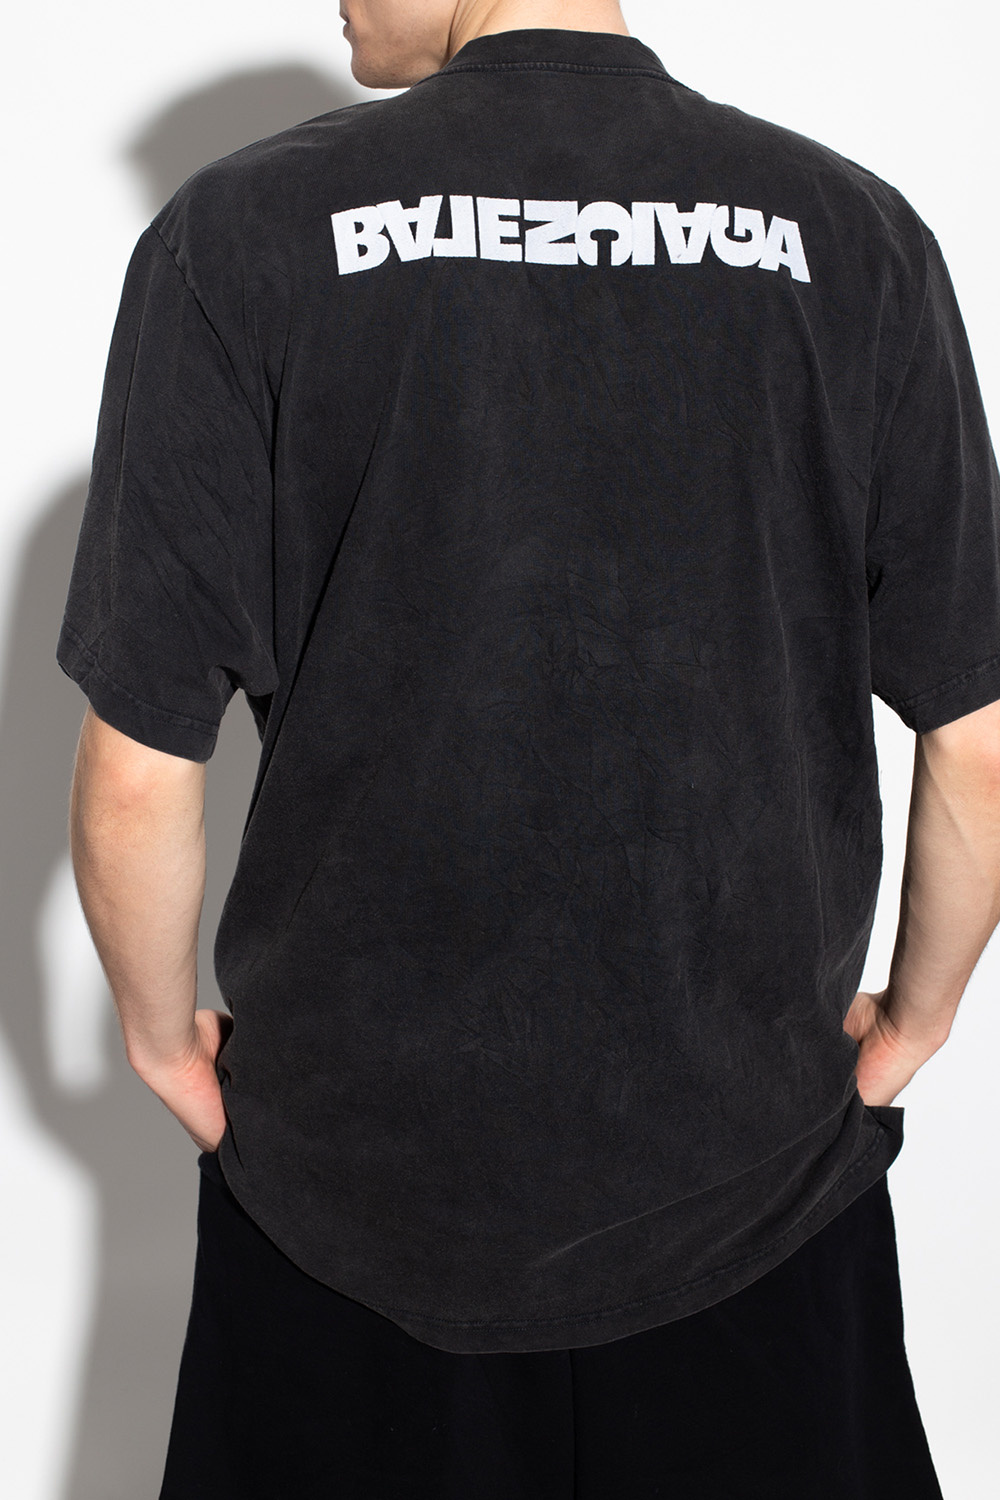 Balenciaga T-shirt shirts with logo